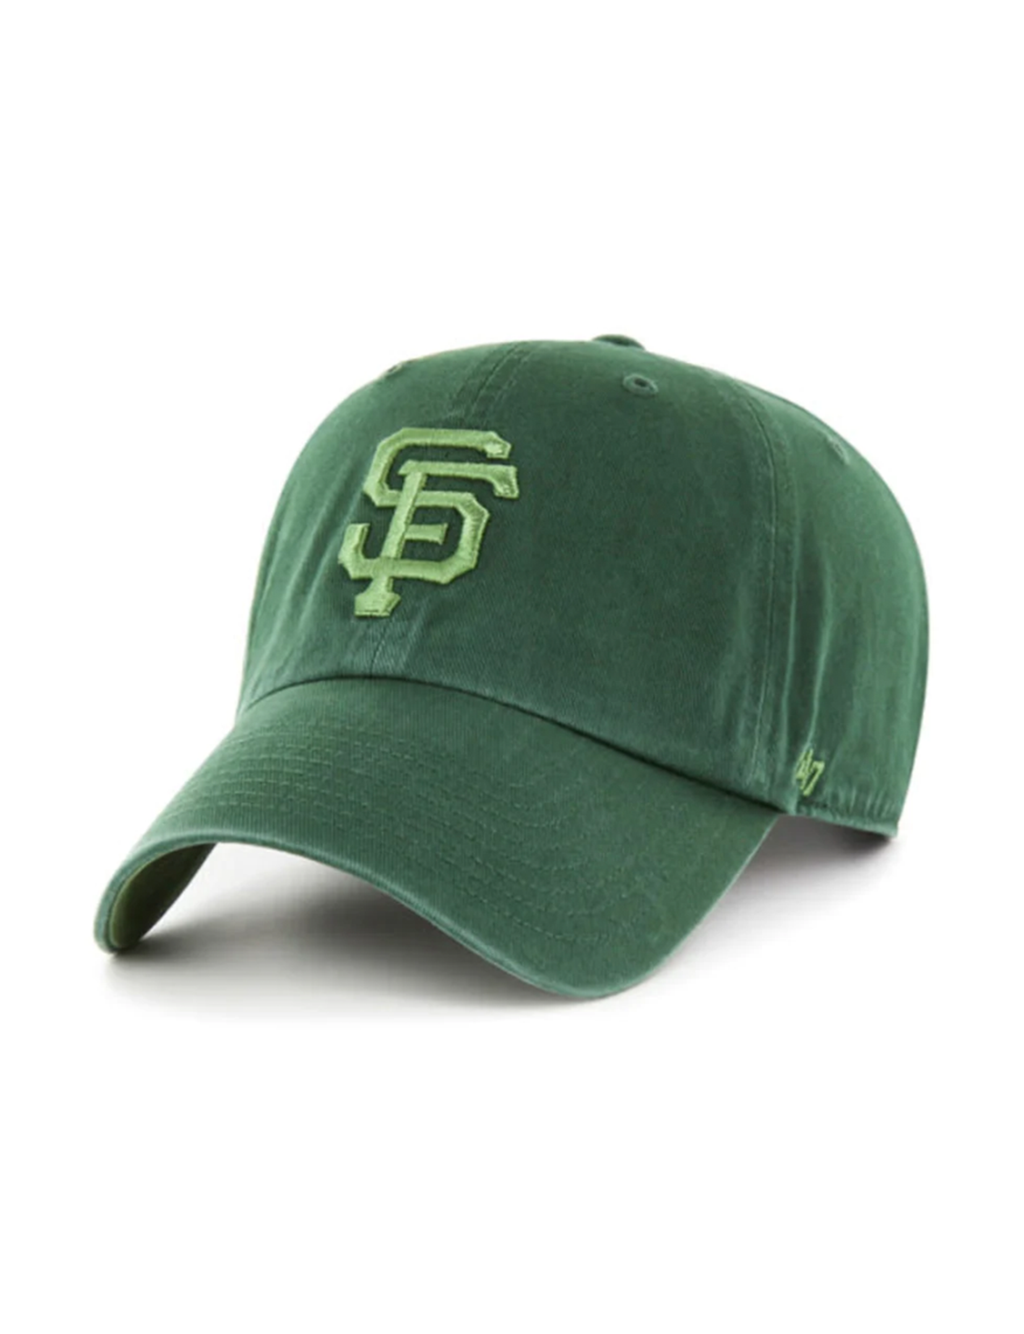 SF Giants Basic Ball Cap, Dark Green